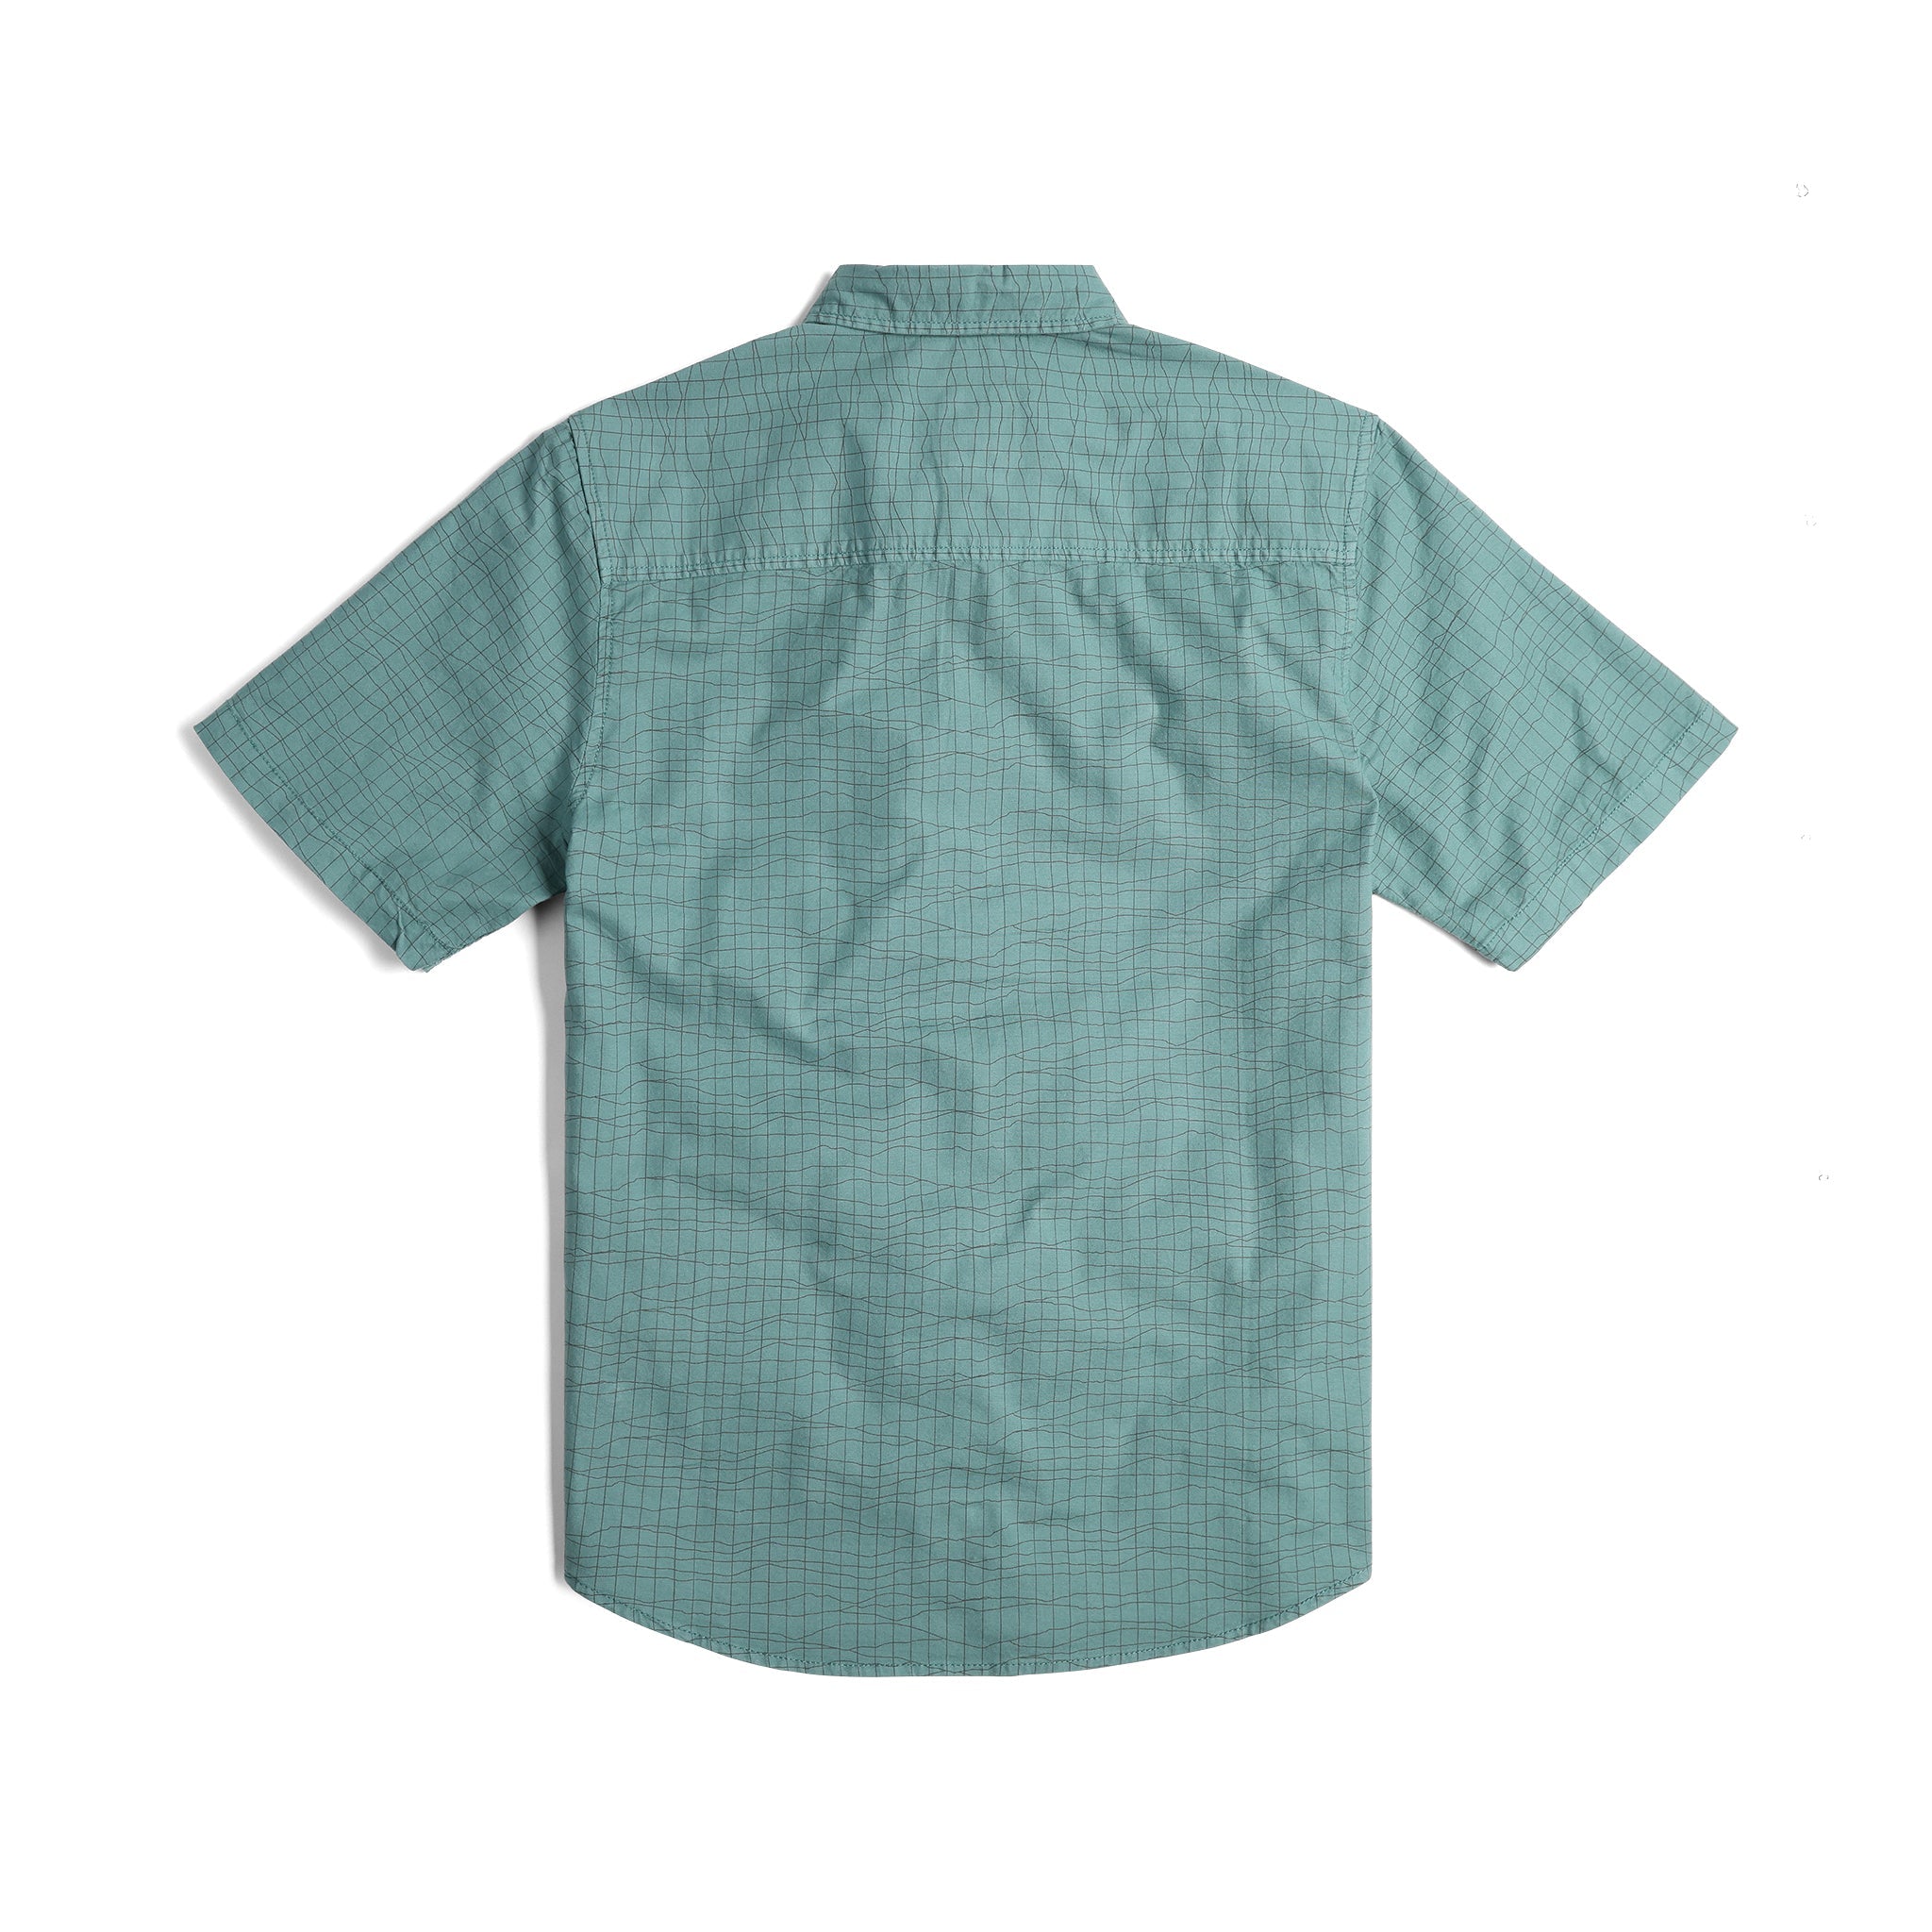 Back View of Topo Designs Dirt Desert Shirt Ss - Men's in "Sea Pine Terrain"